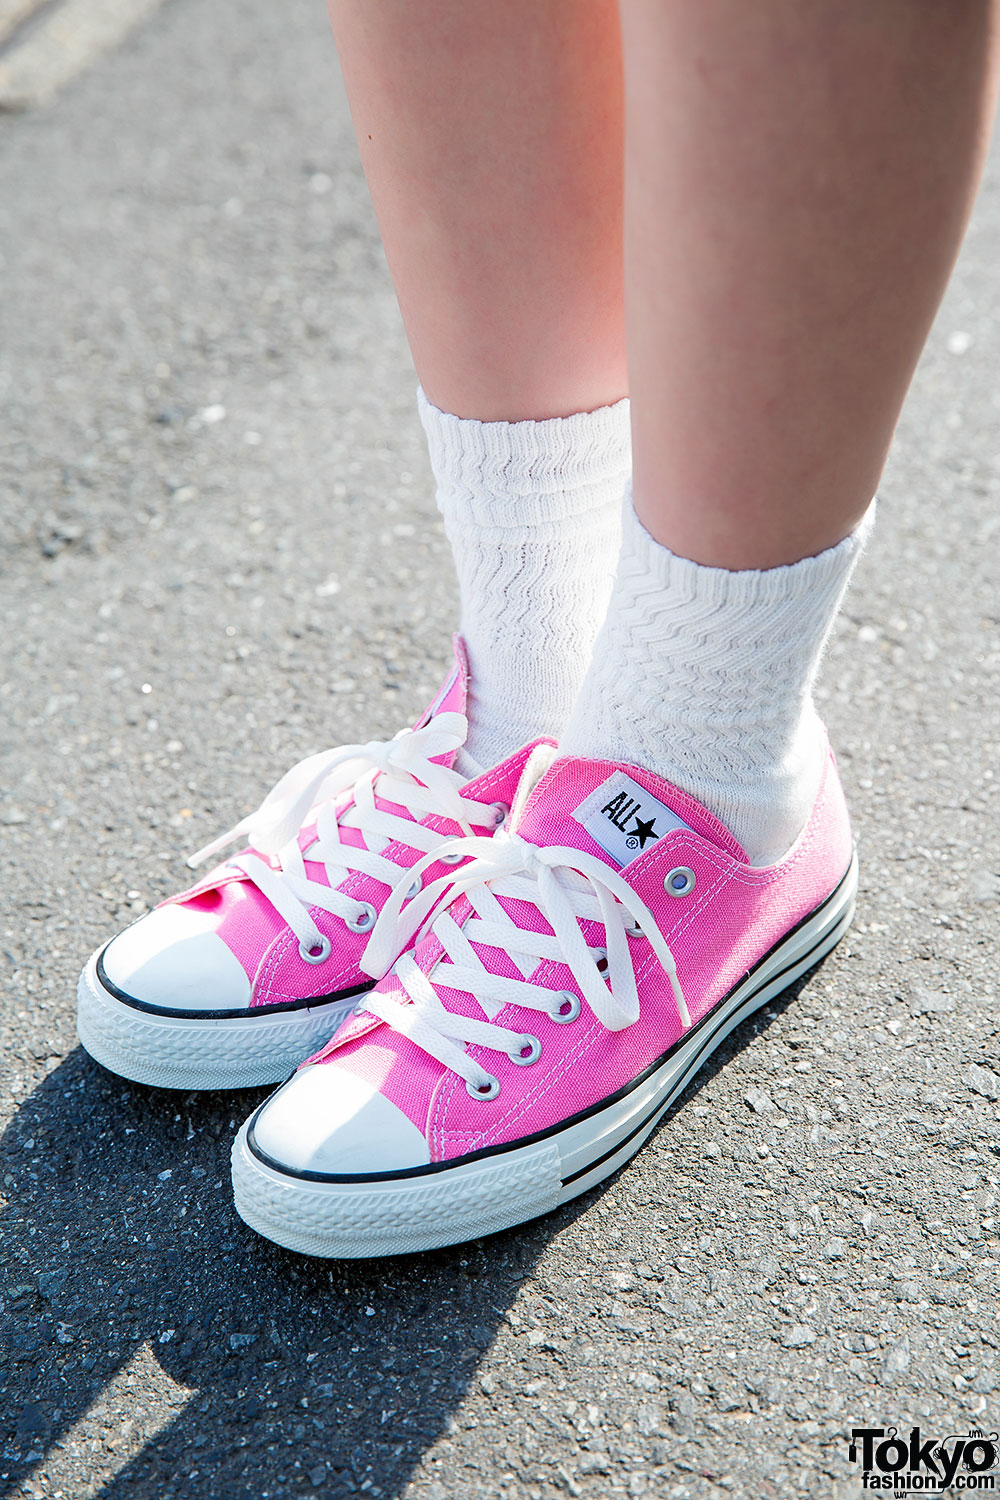 Harajuku Girl in Pink Hat, Corduroy Pinafore & Converse Sneakers